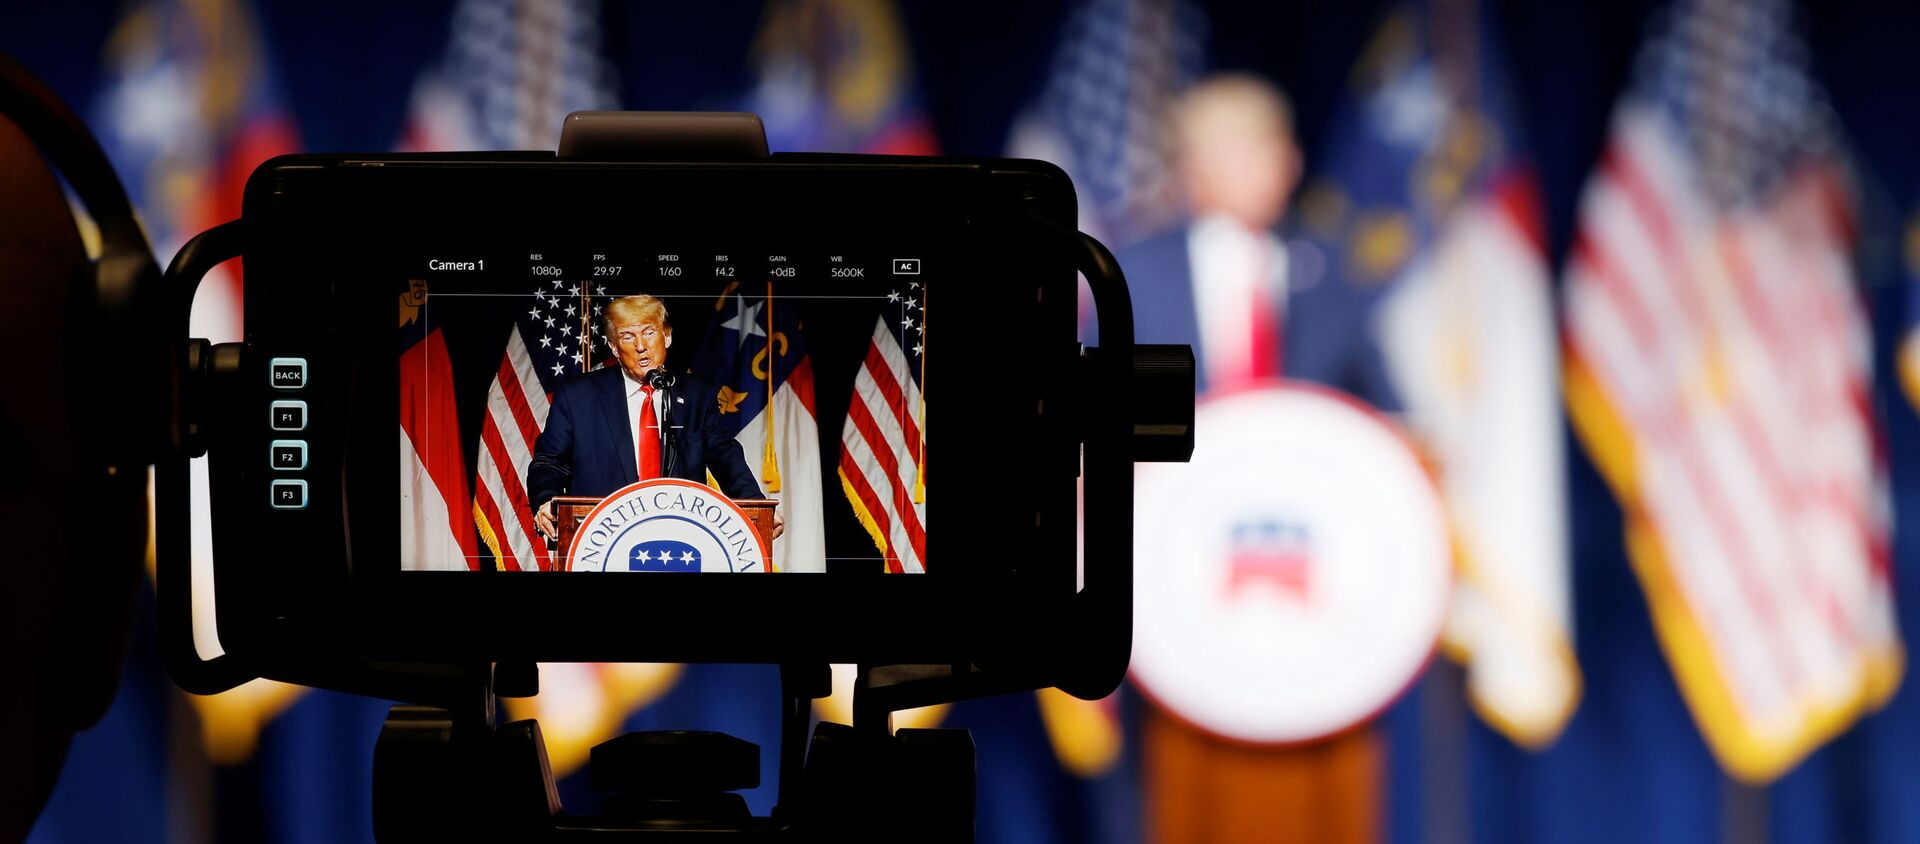 Former U.S. President Donald Trump is seen in a live television monitor as he speaks at the North Carolina GOP convention dinner in Greenville, North Carolina, U.S. June 5, 2021 - Sputnik International, 1920, 29.06.2021